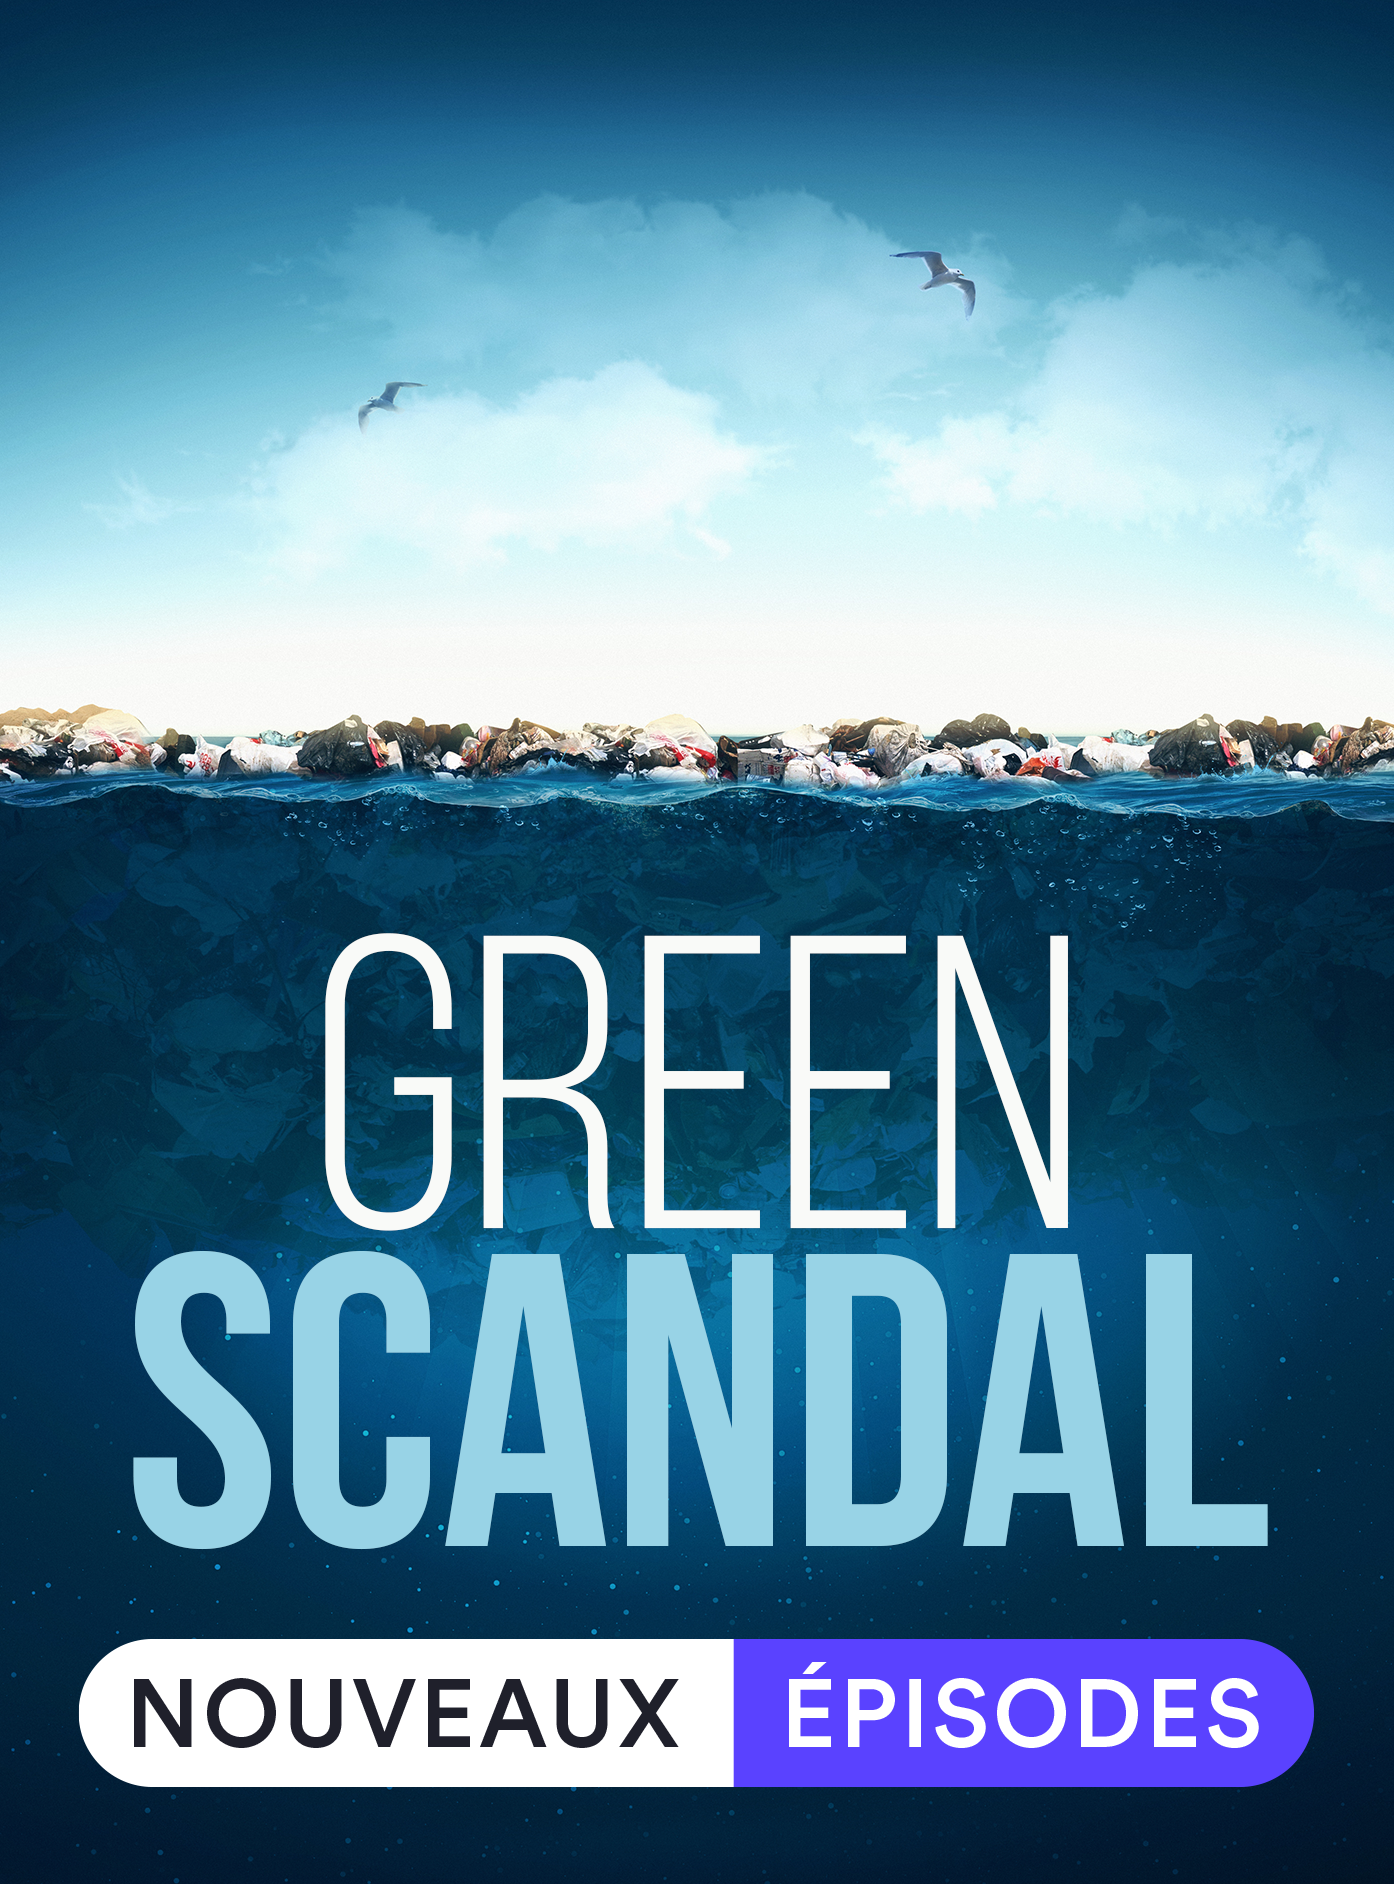 Green scandal